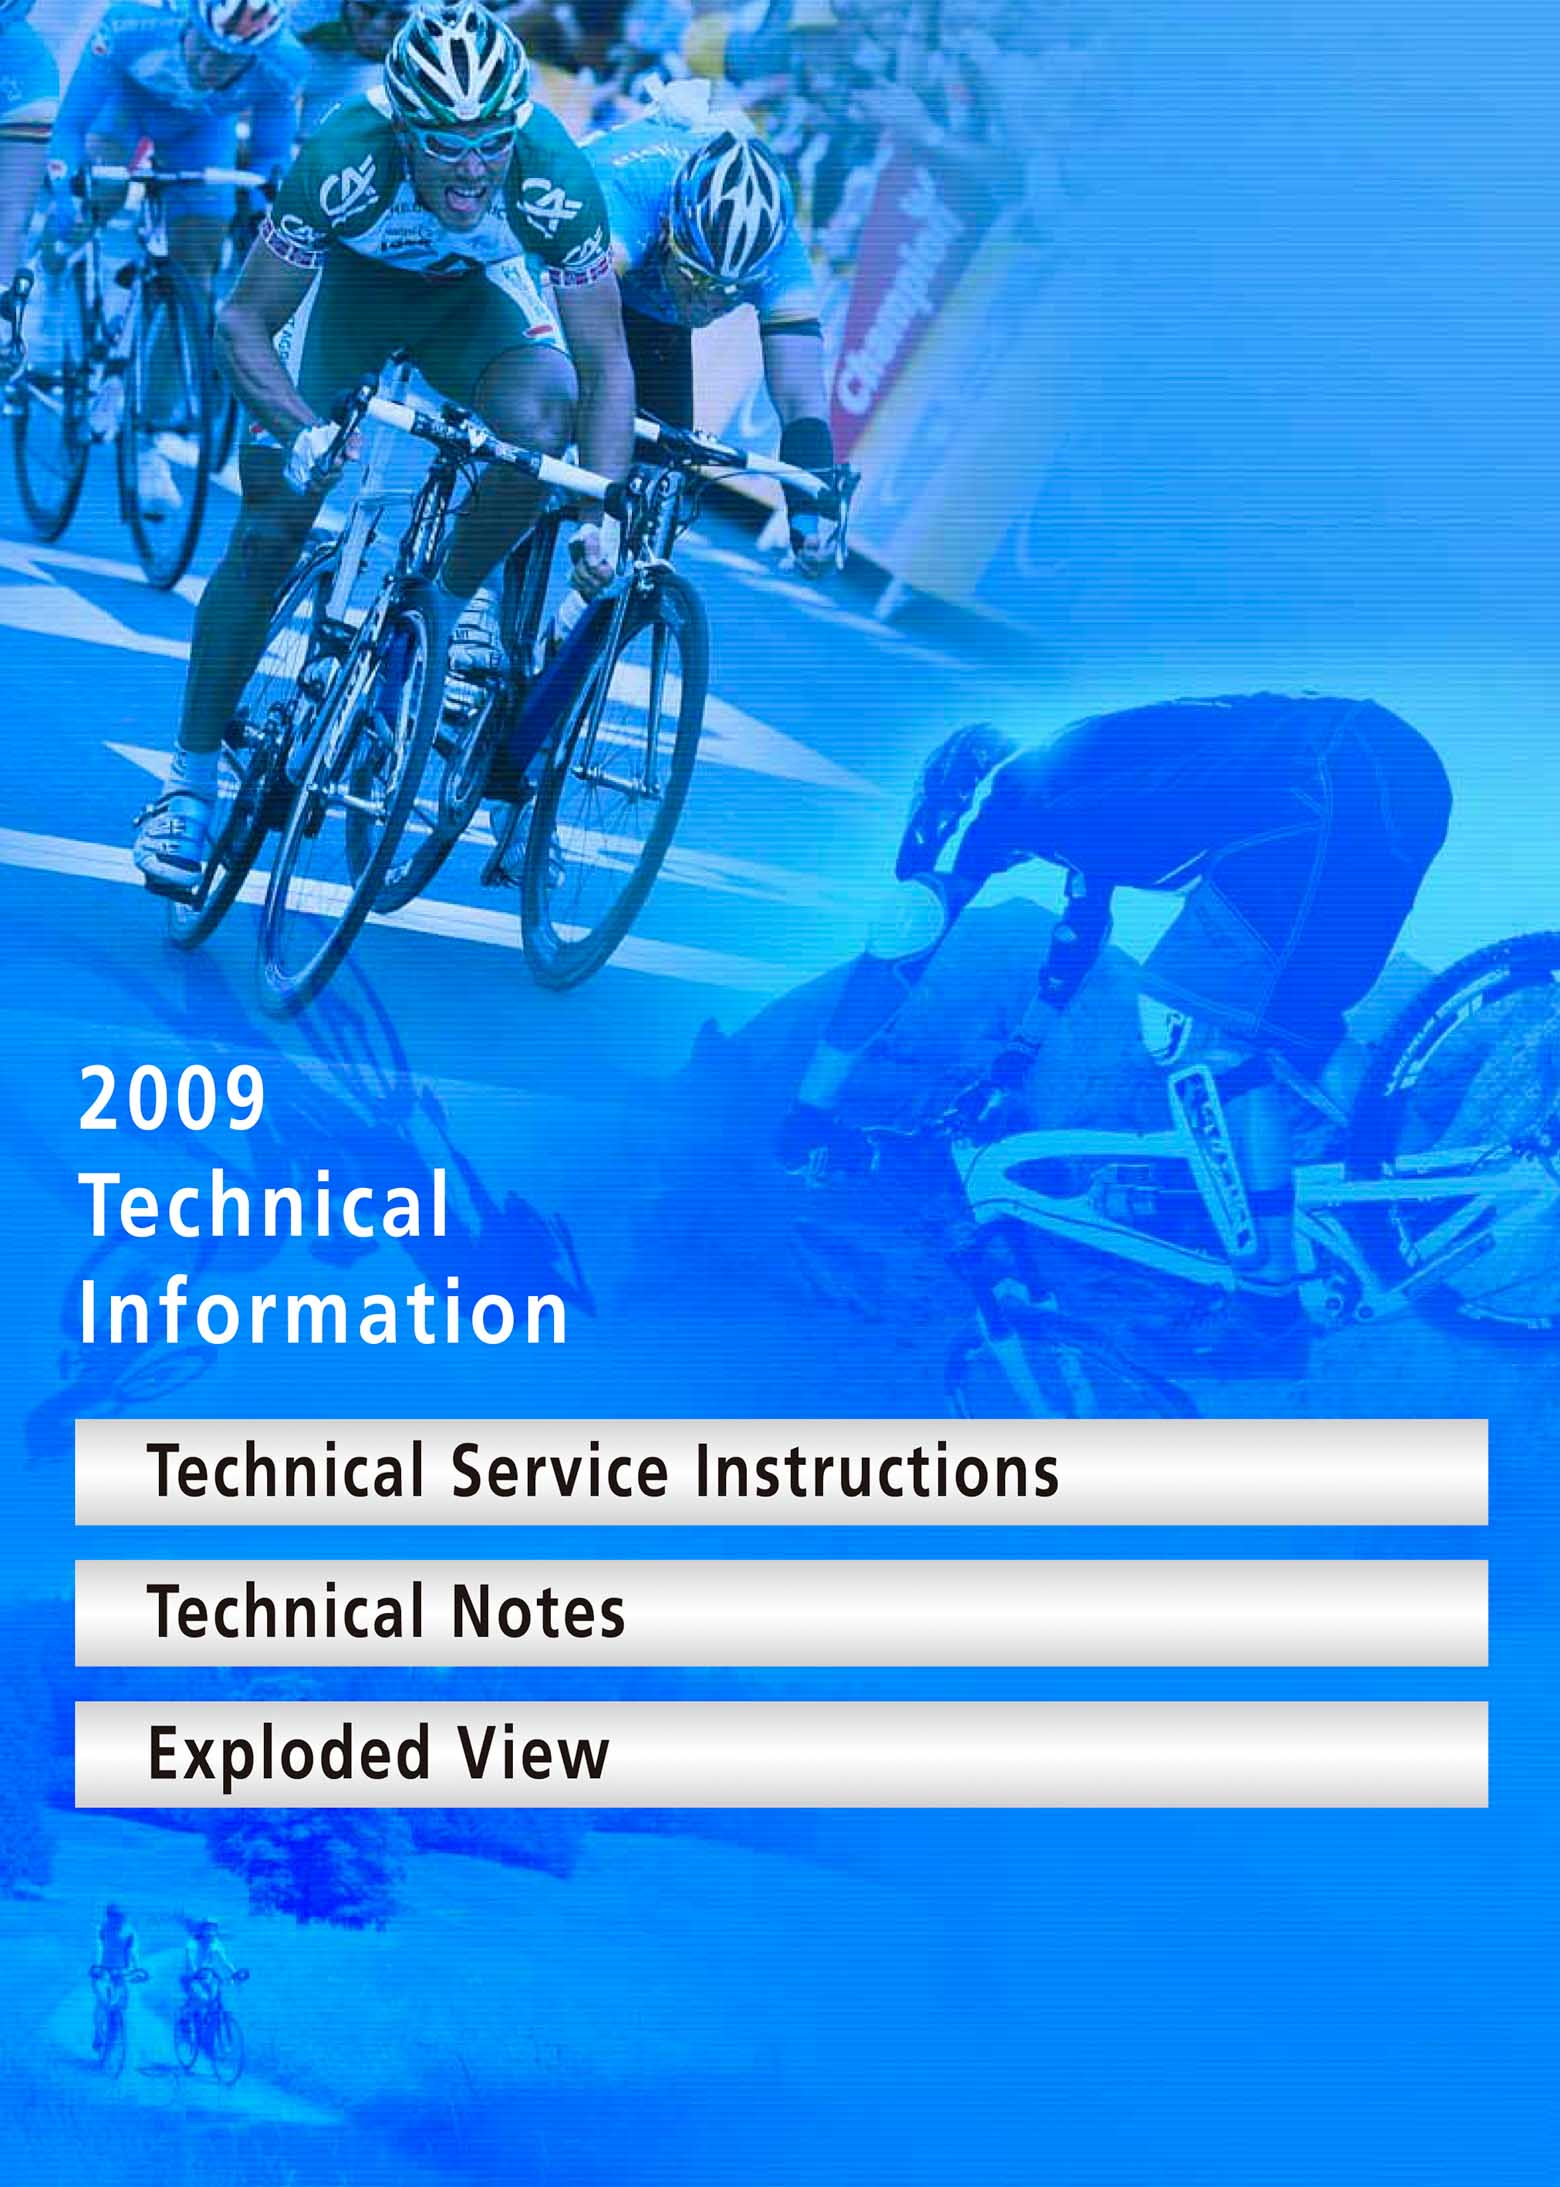 Shimano Technical Information - 2009 image 01 main image